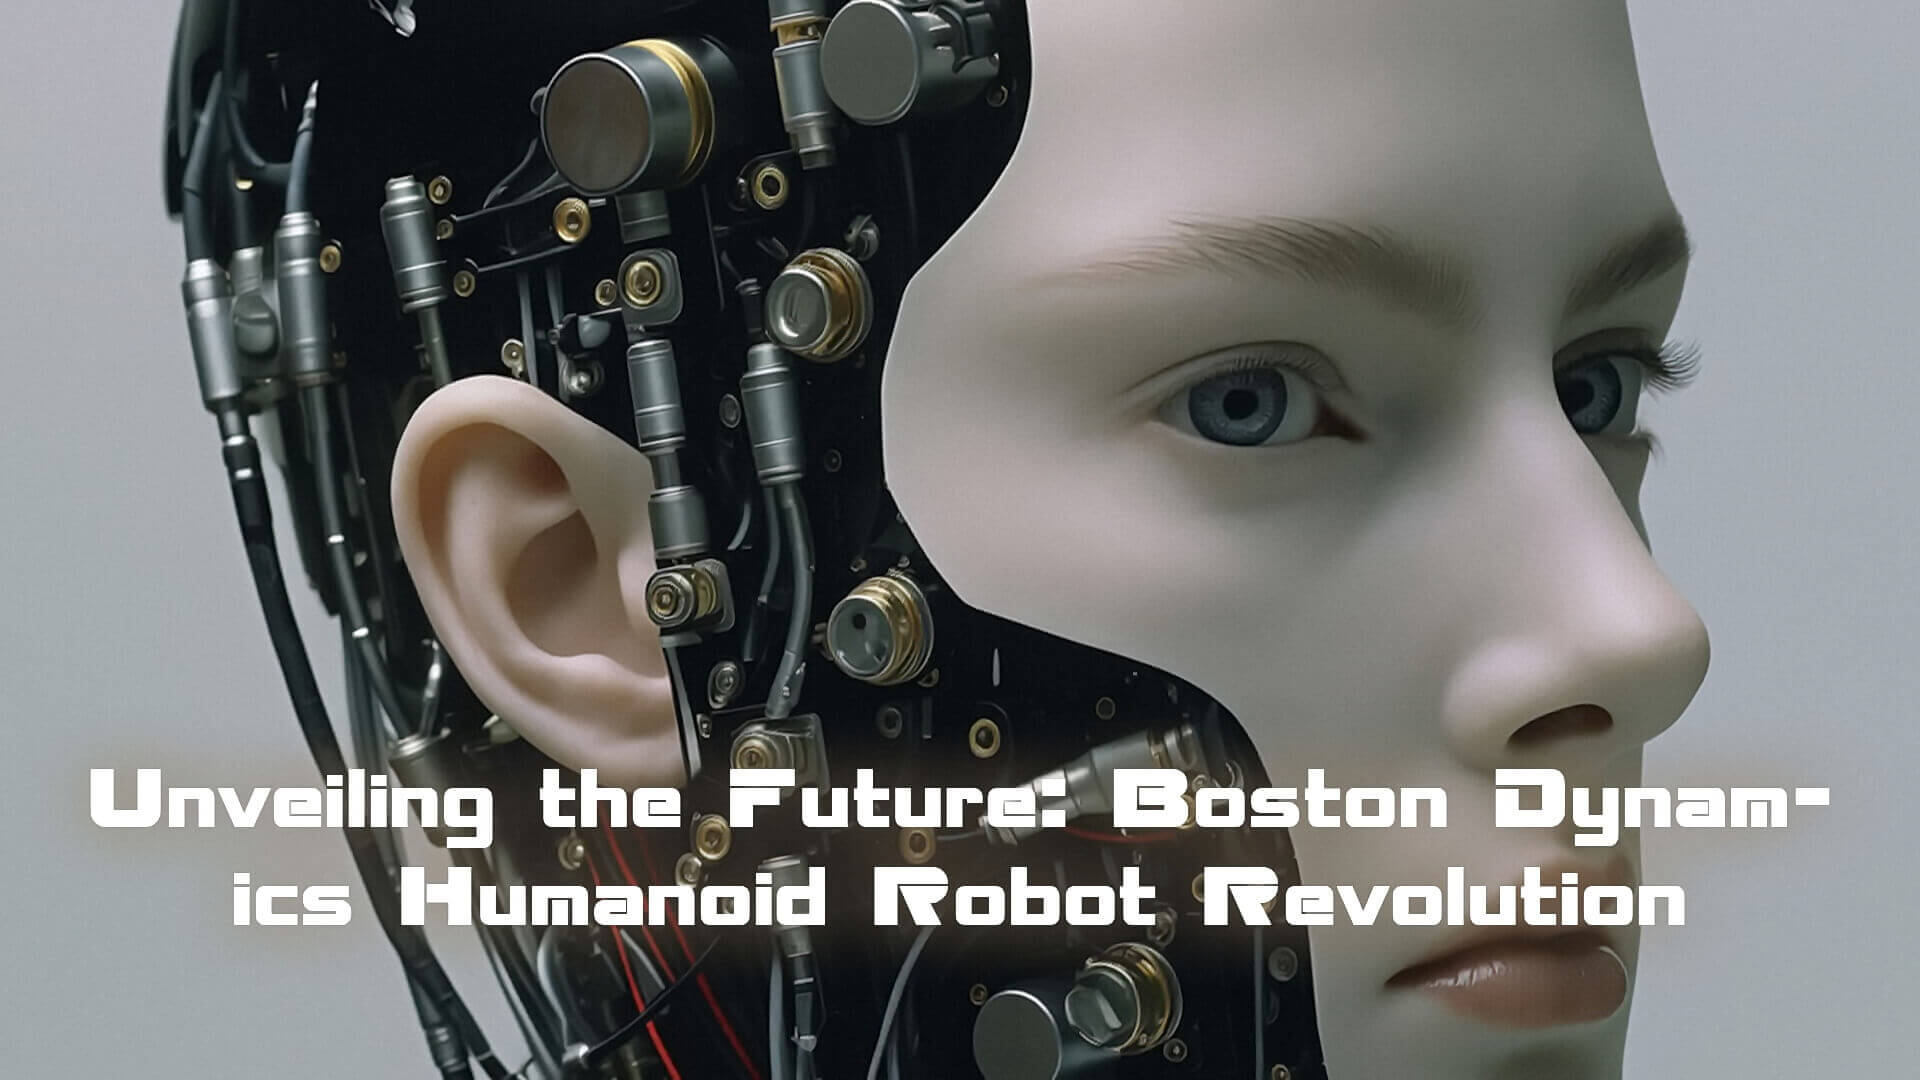 Boston Dynamics Humanoid Robot Revolution